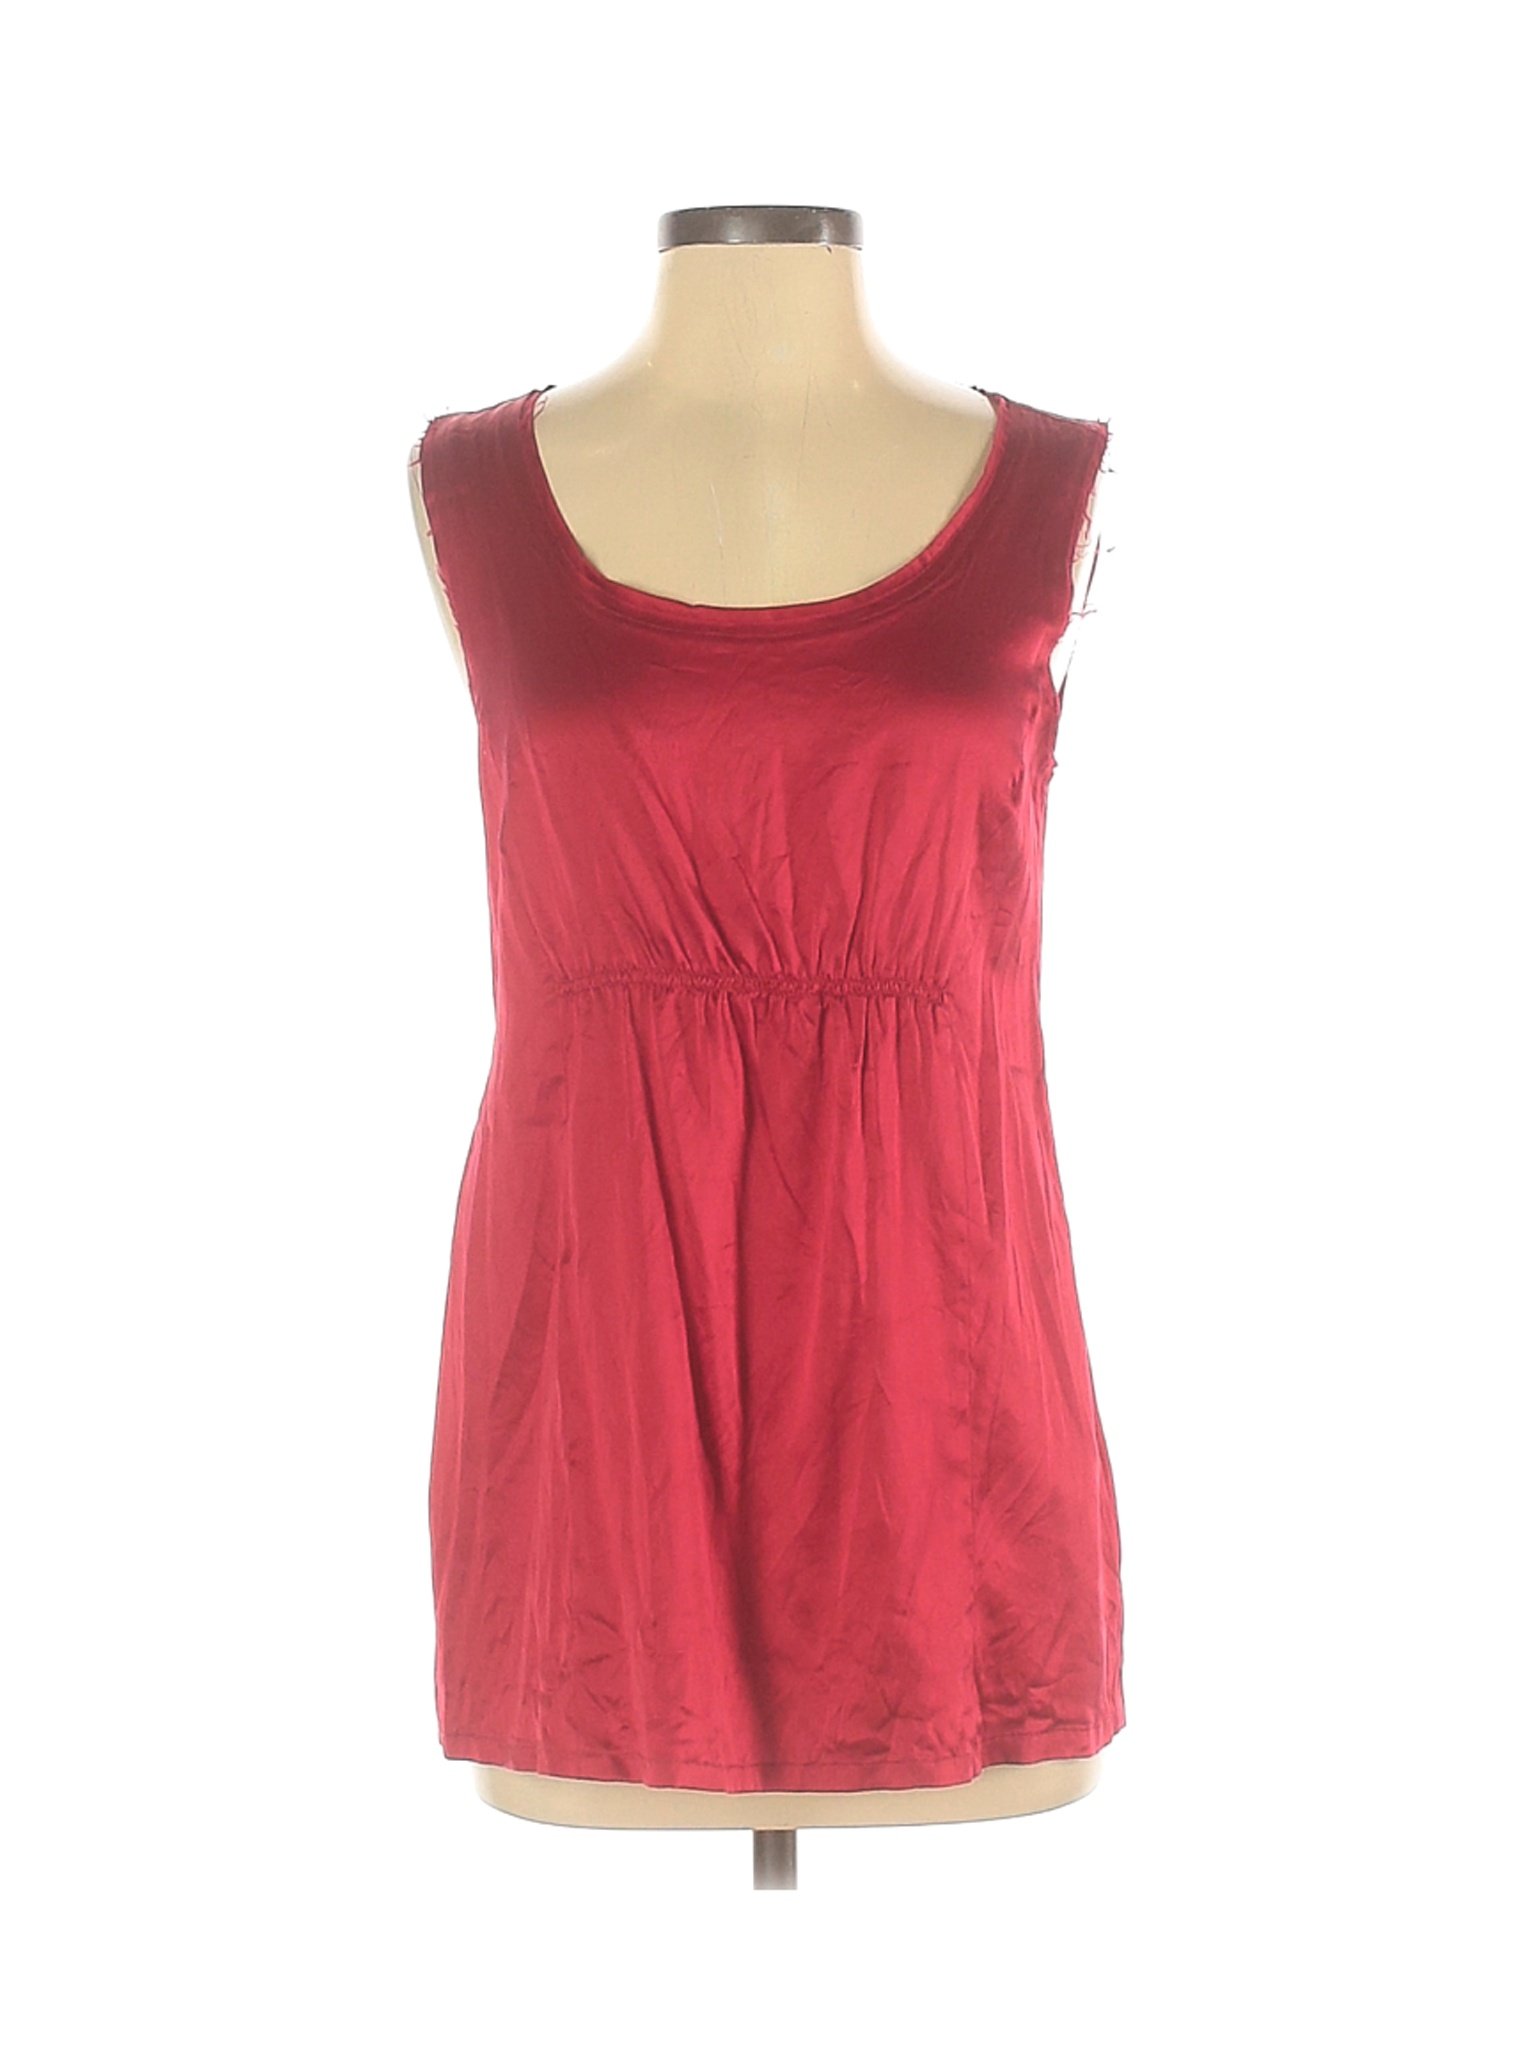 DKNY Women Red Sleeveless Silk Top S | eBay